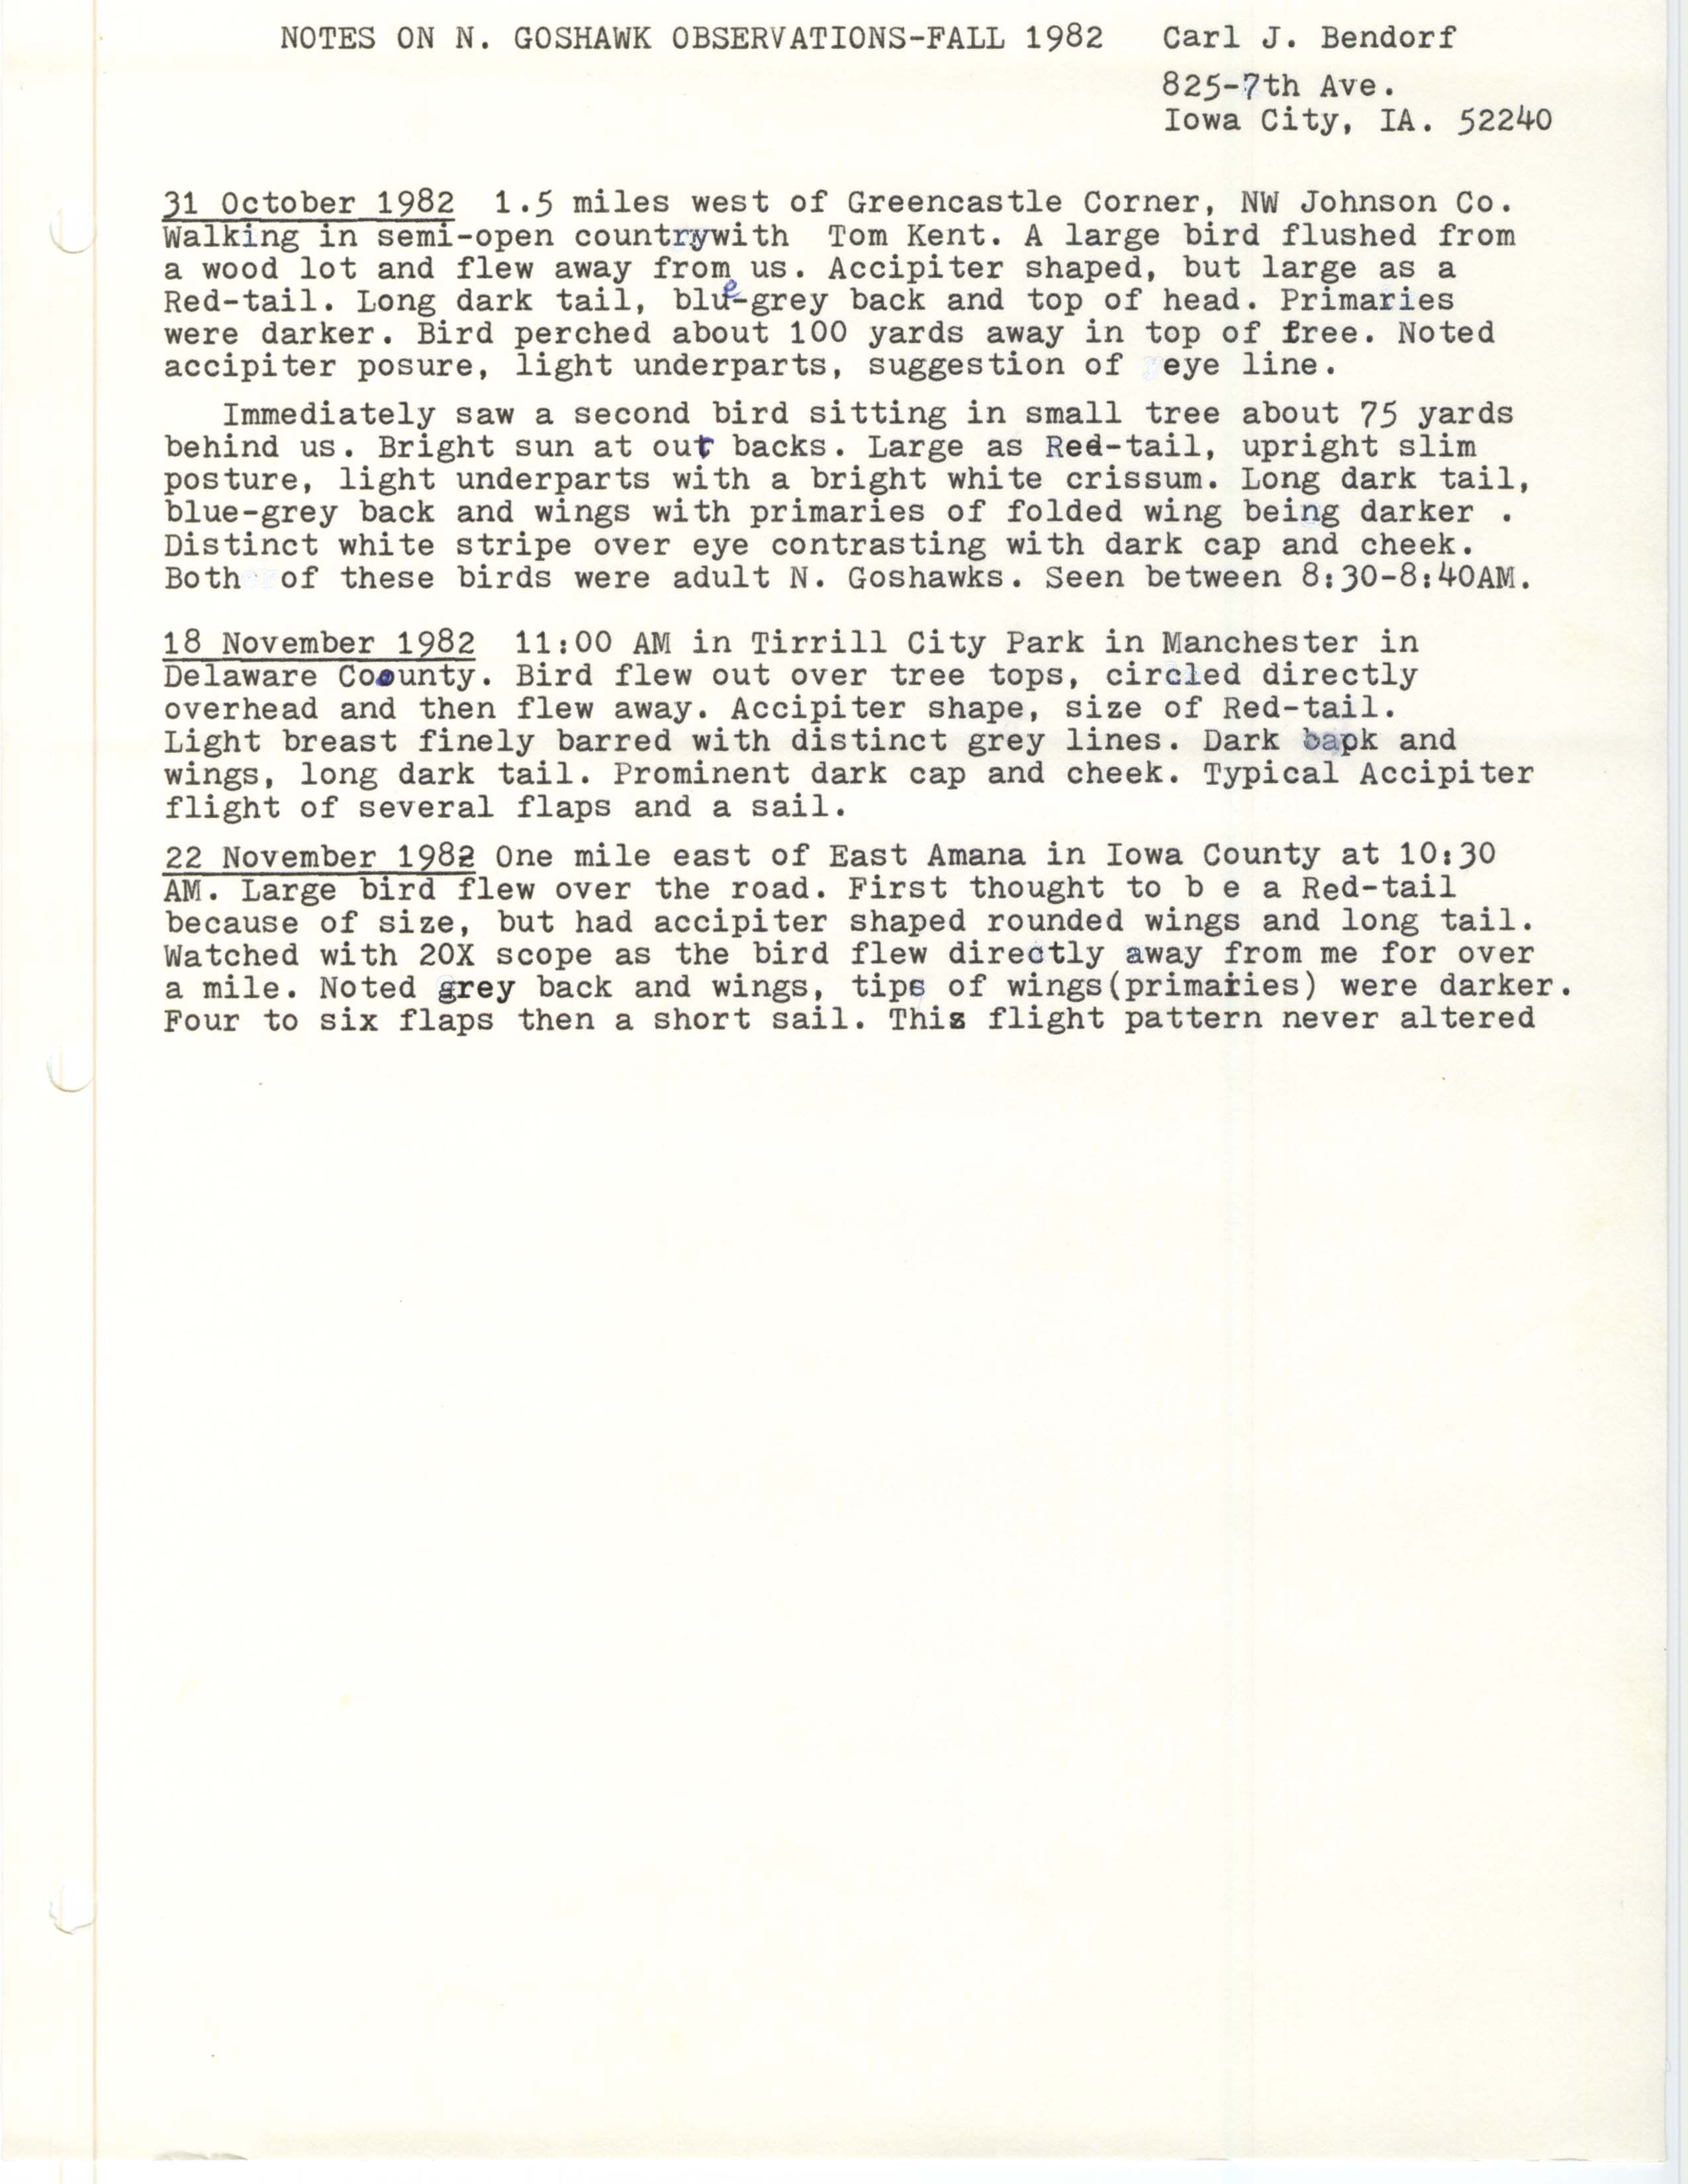 Notes on N. Goshawk observations - fall 1982